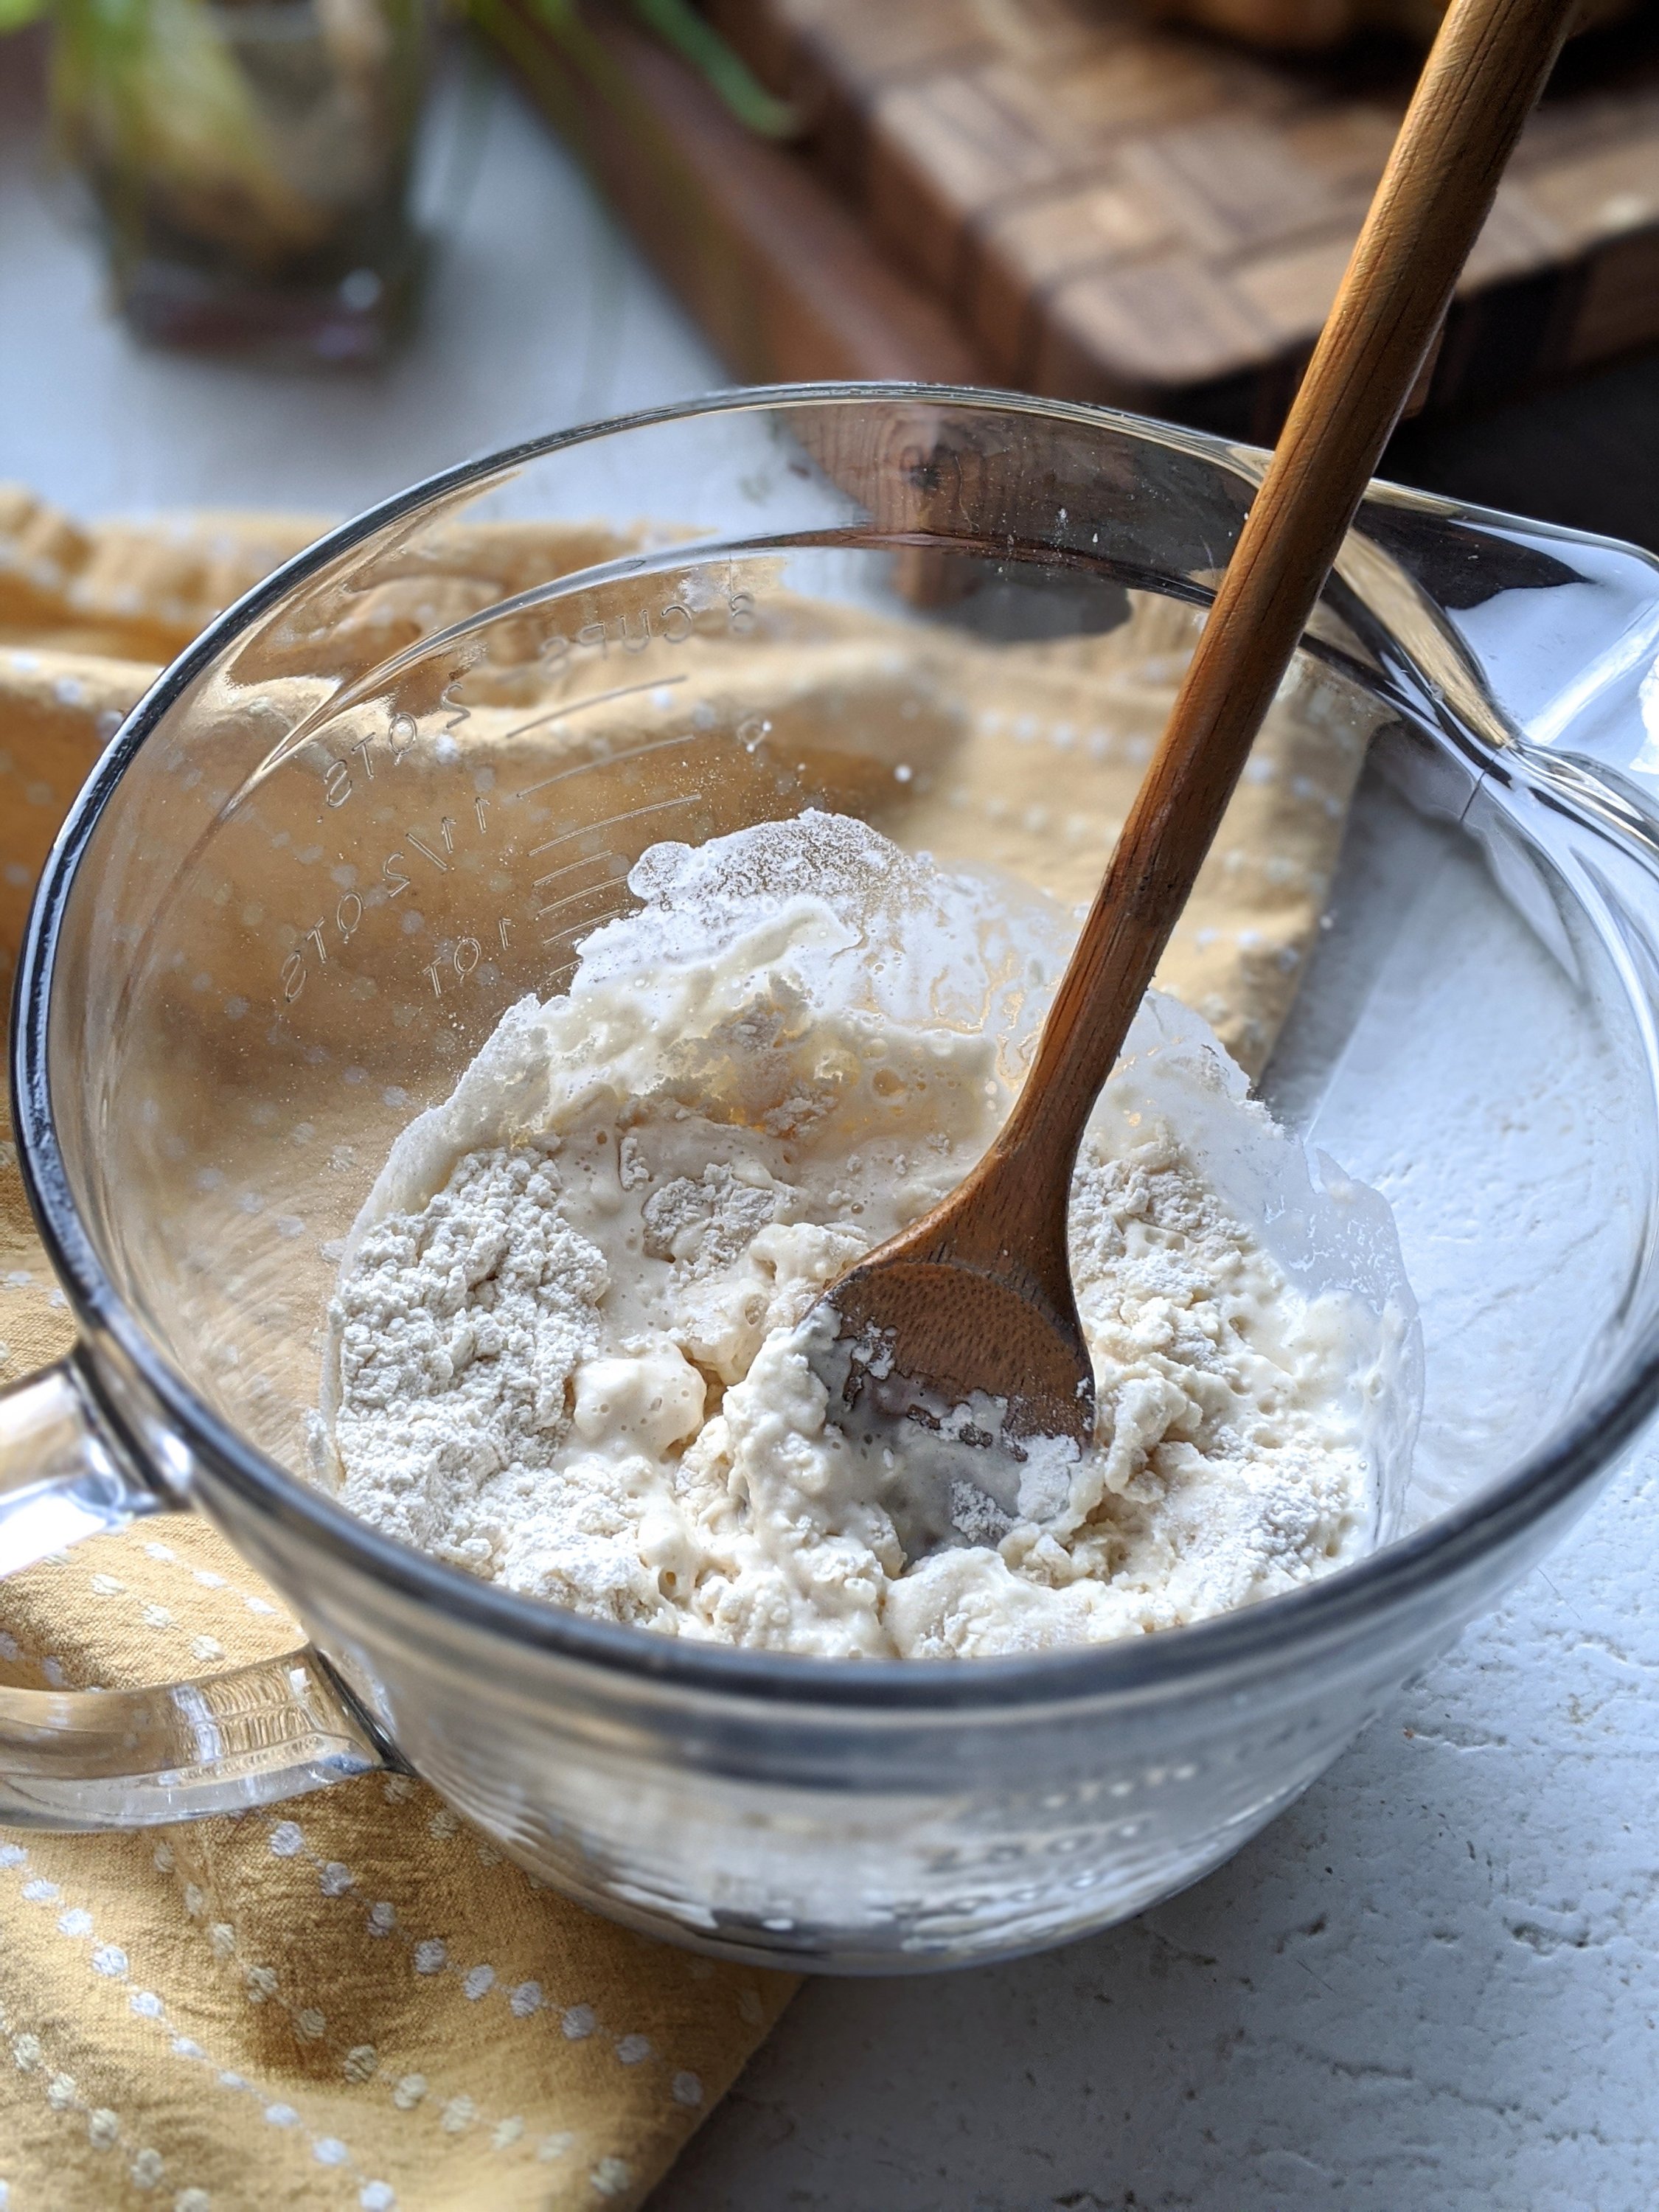 vegan sourdough starter recipe how to make vegan sourdough starter at home with flour and water no yeast